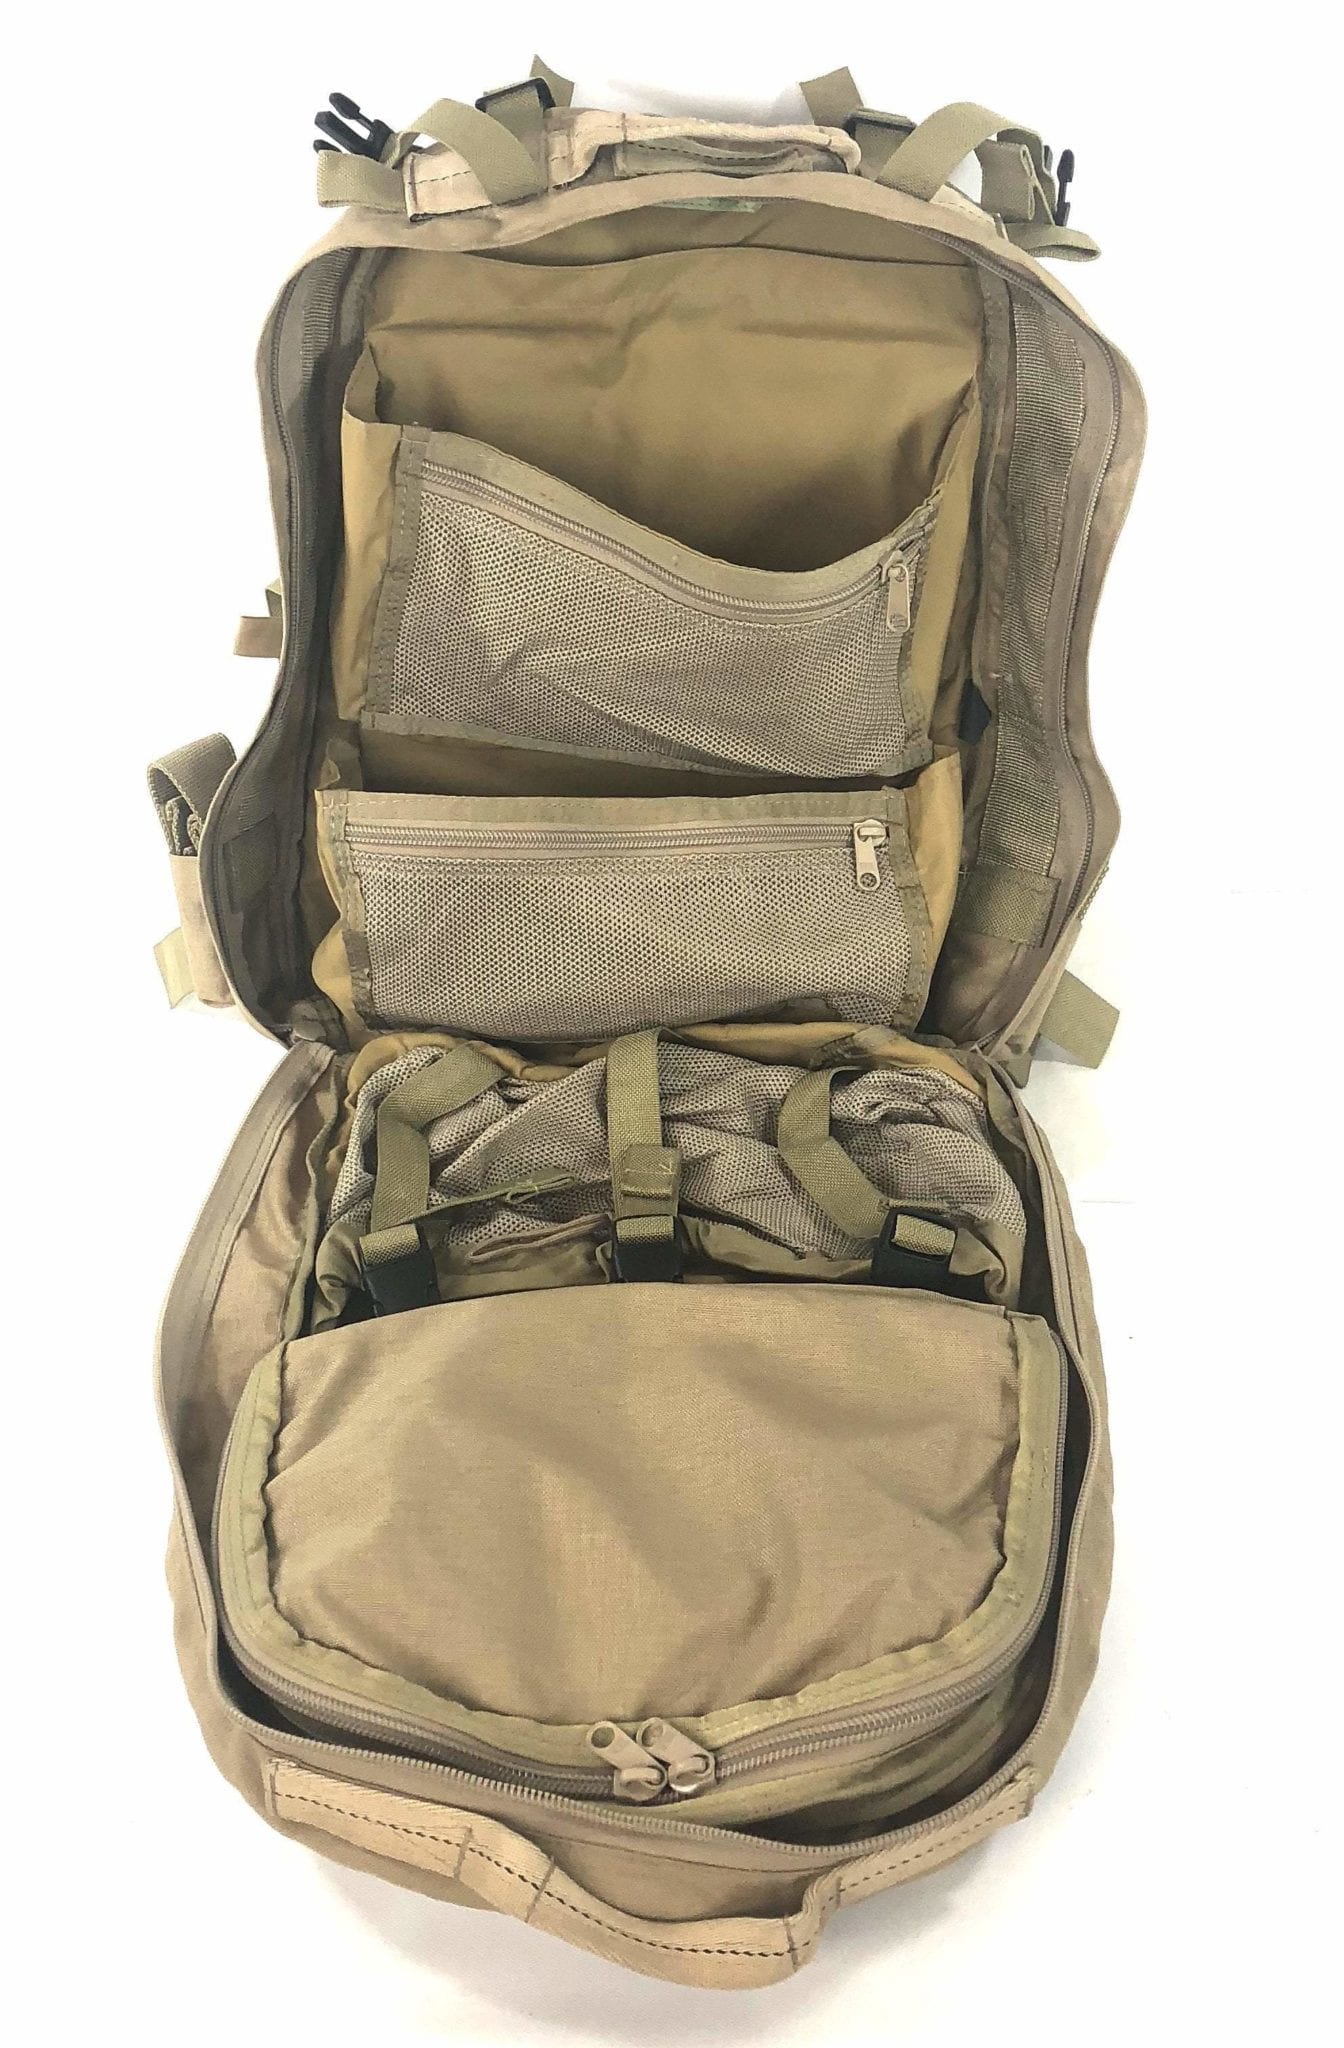 Pre-Owned London Bridge Trading Medical Backpack, LBT-1562B, Tan